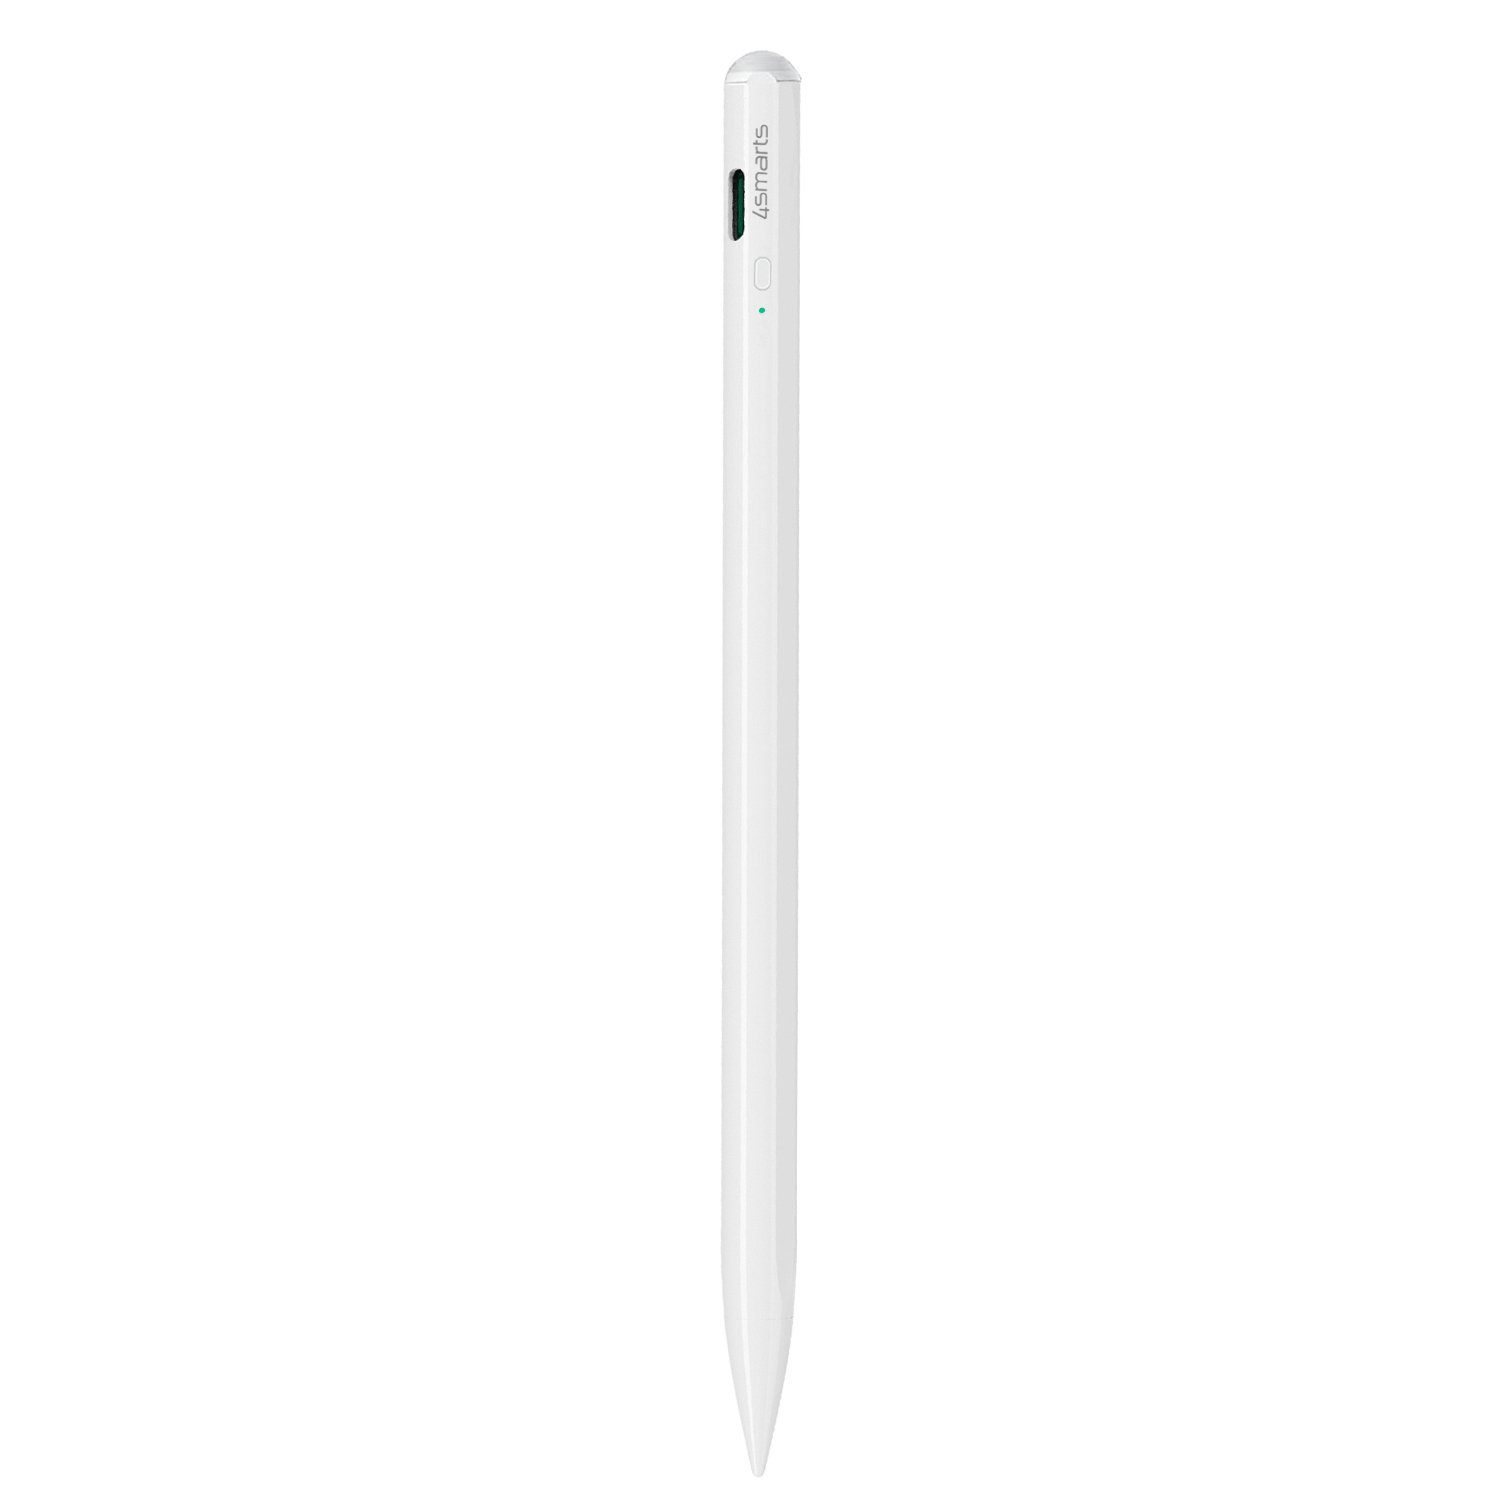 4smarts Eingabestift Pencil Pro 3 für Apple iPad / iPad Pro aktiver Eingabestift, kapazitiv, USB-C